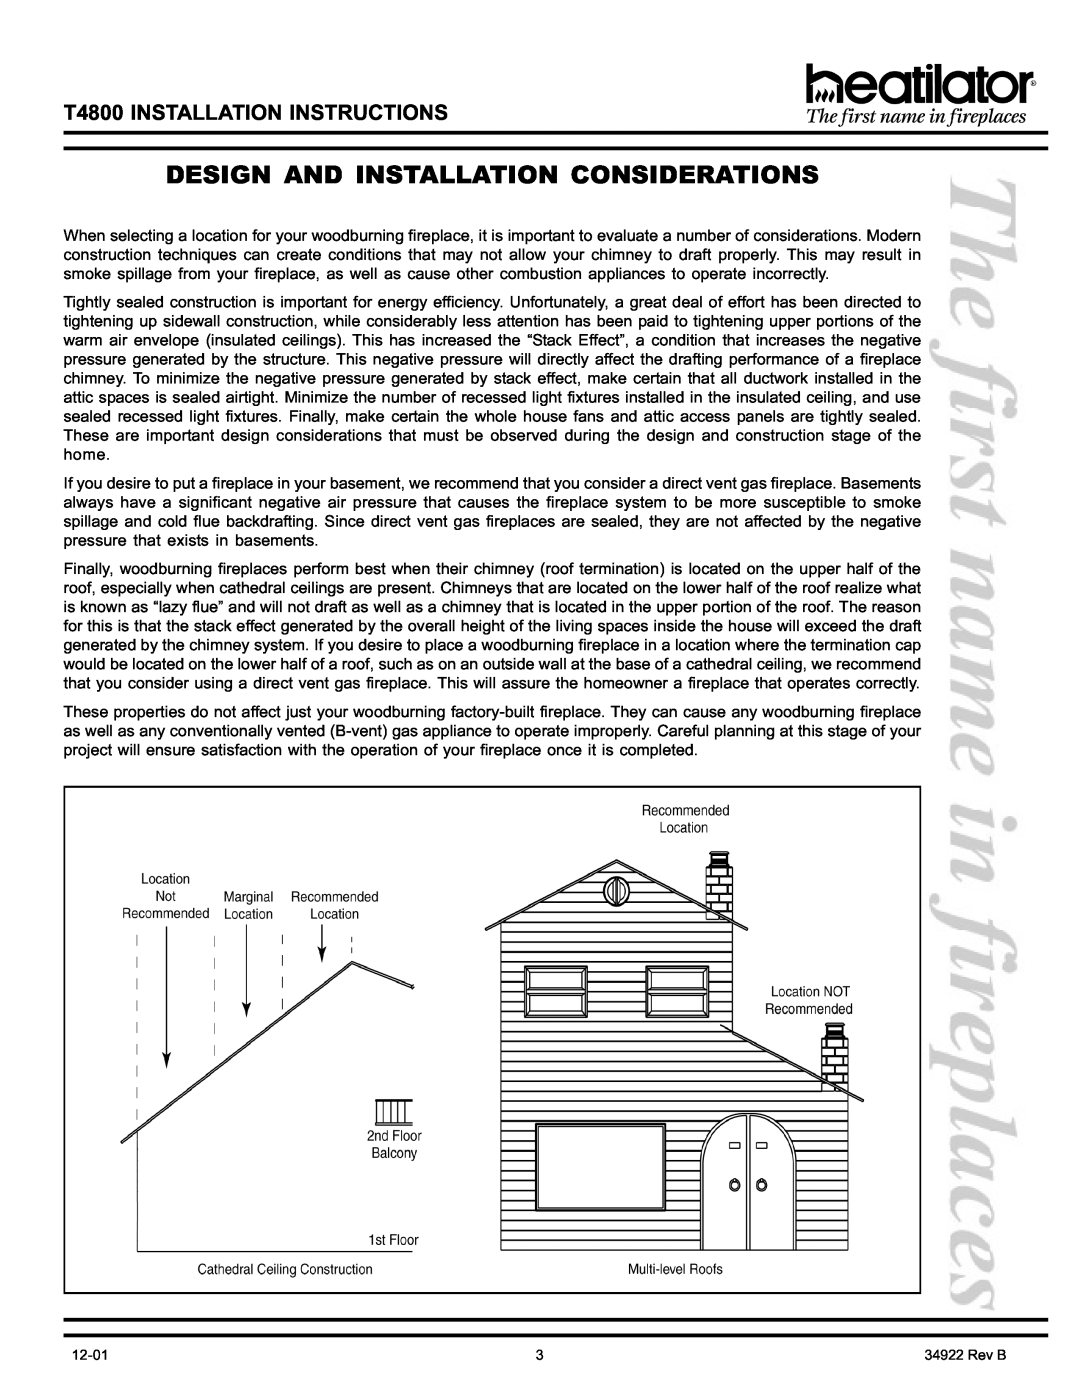 Heatiator manual Design And Installation Considerations, T4800 INSTALLATION INSTRUCTIONS 